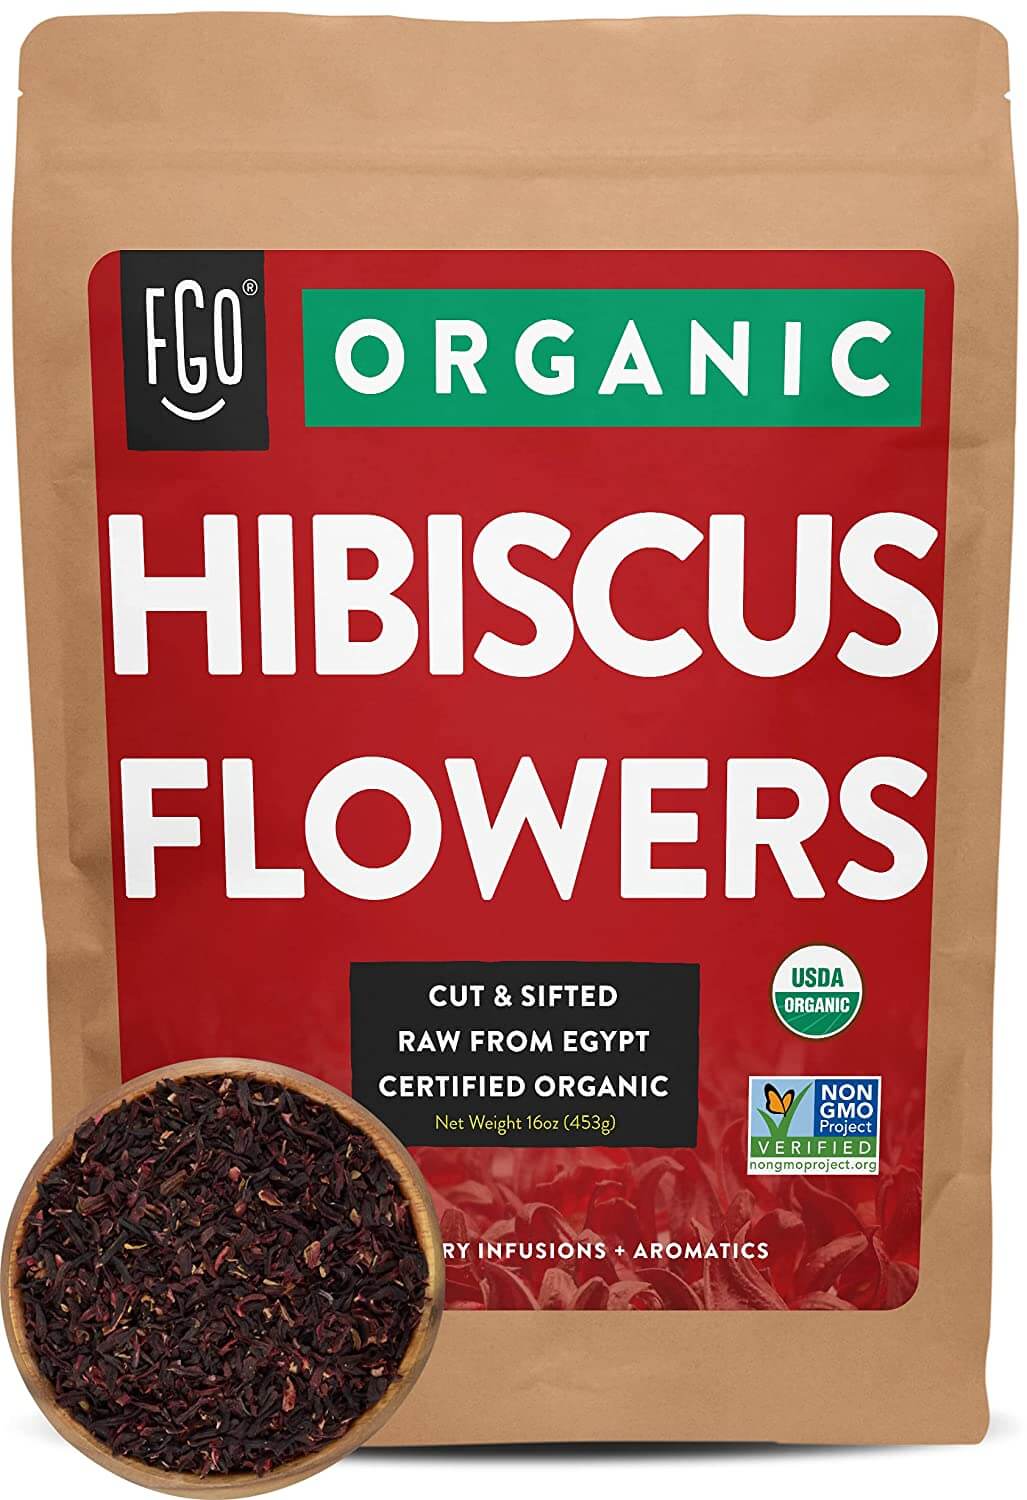 hibiscus flowers organic 